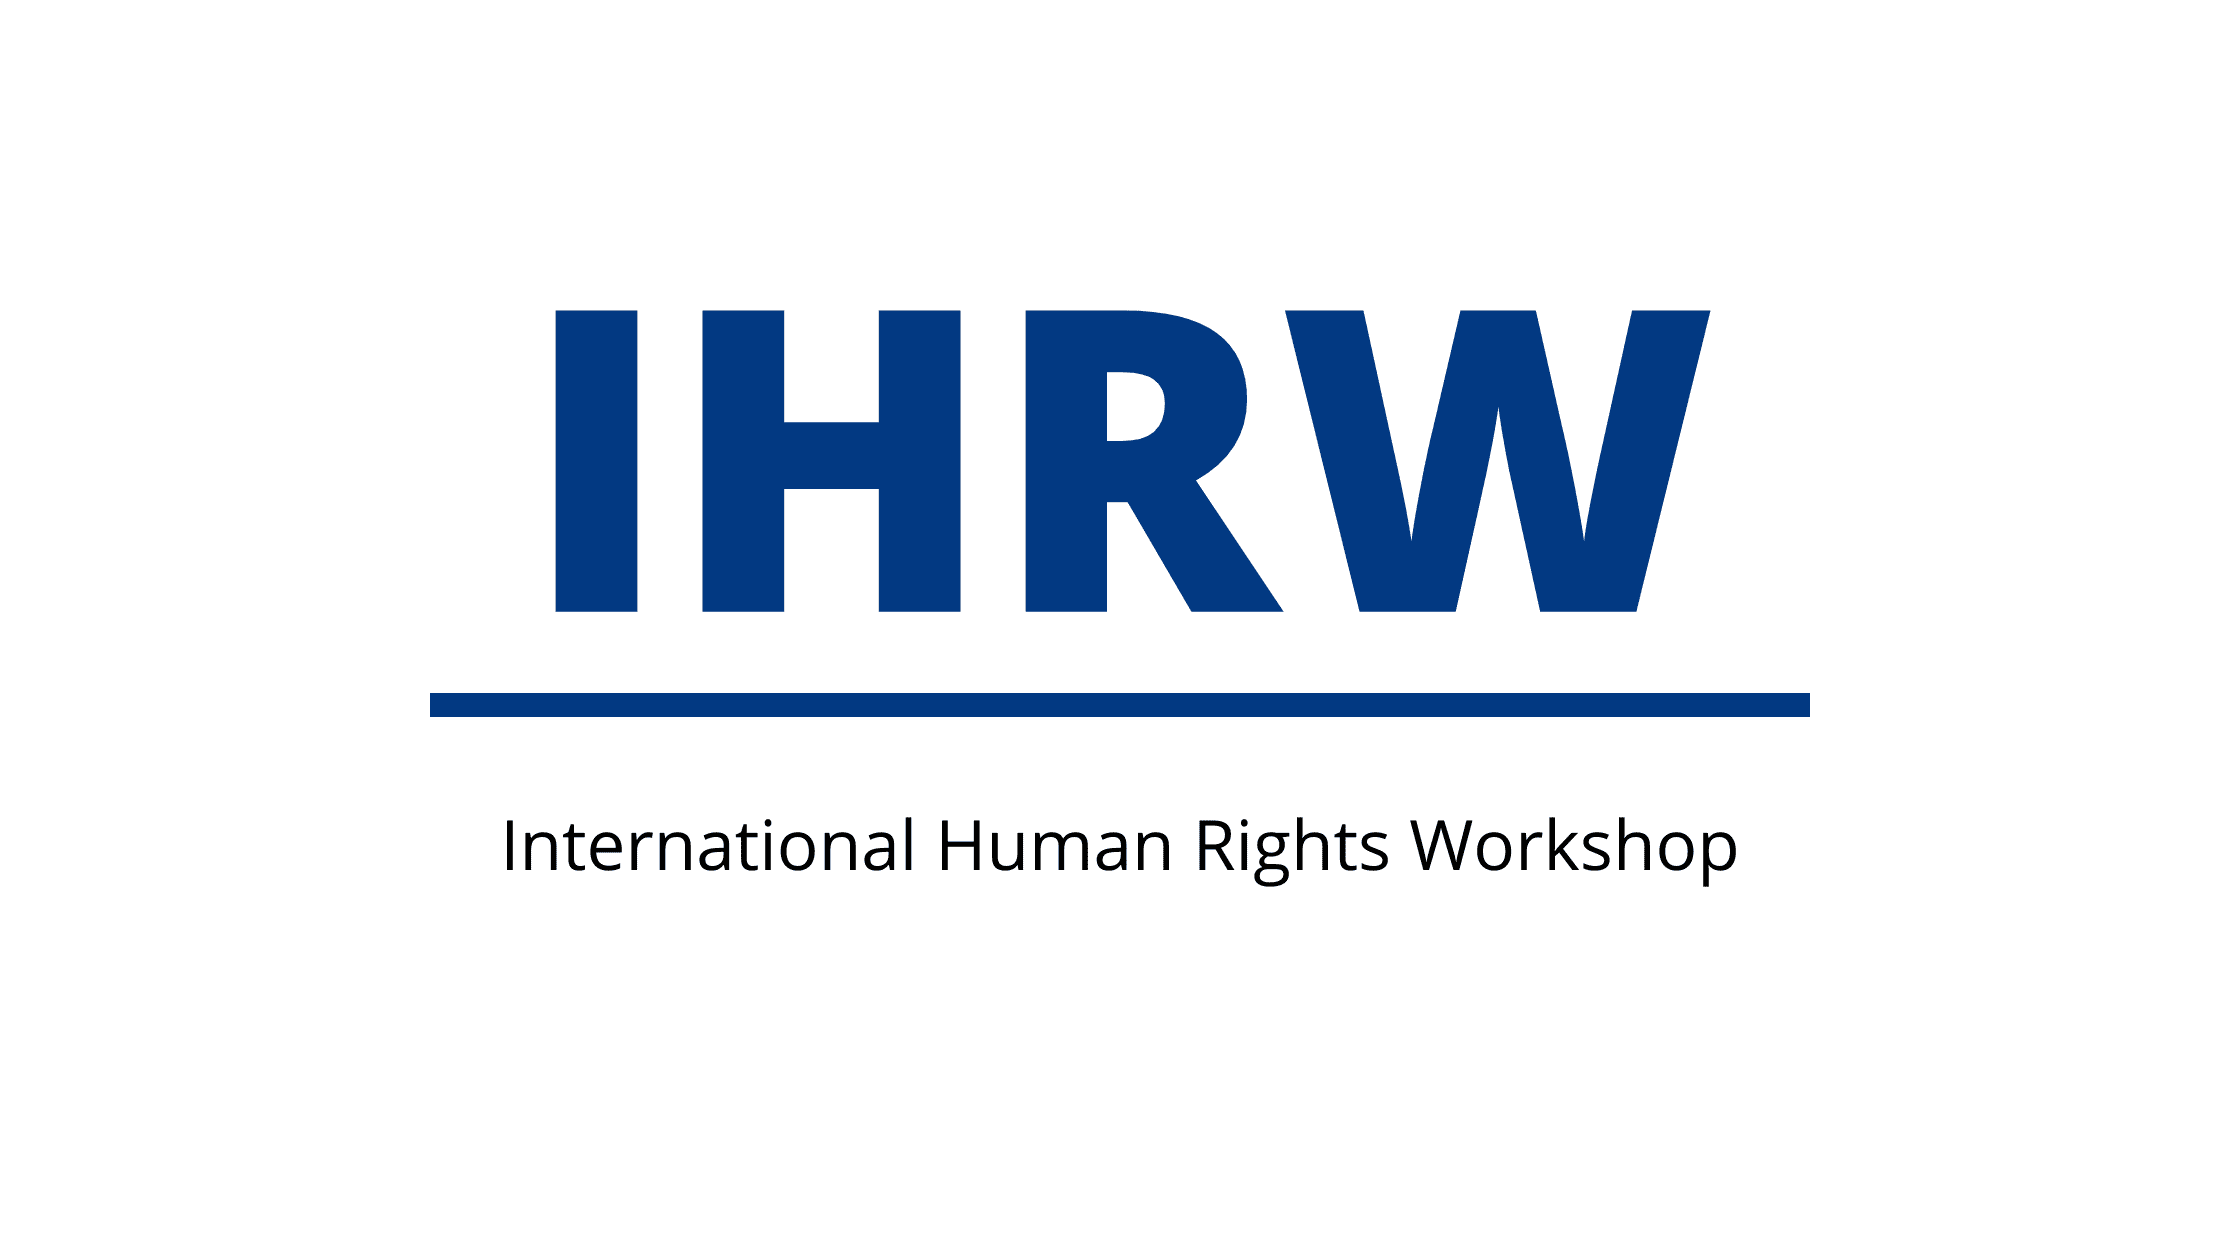 IHRW (International Human Rights Workshop) SLP Project Logo